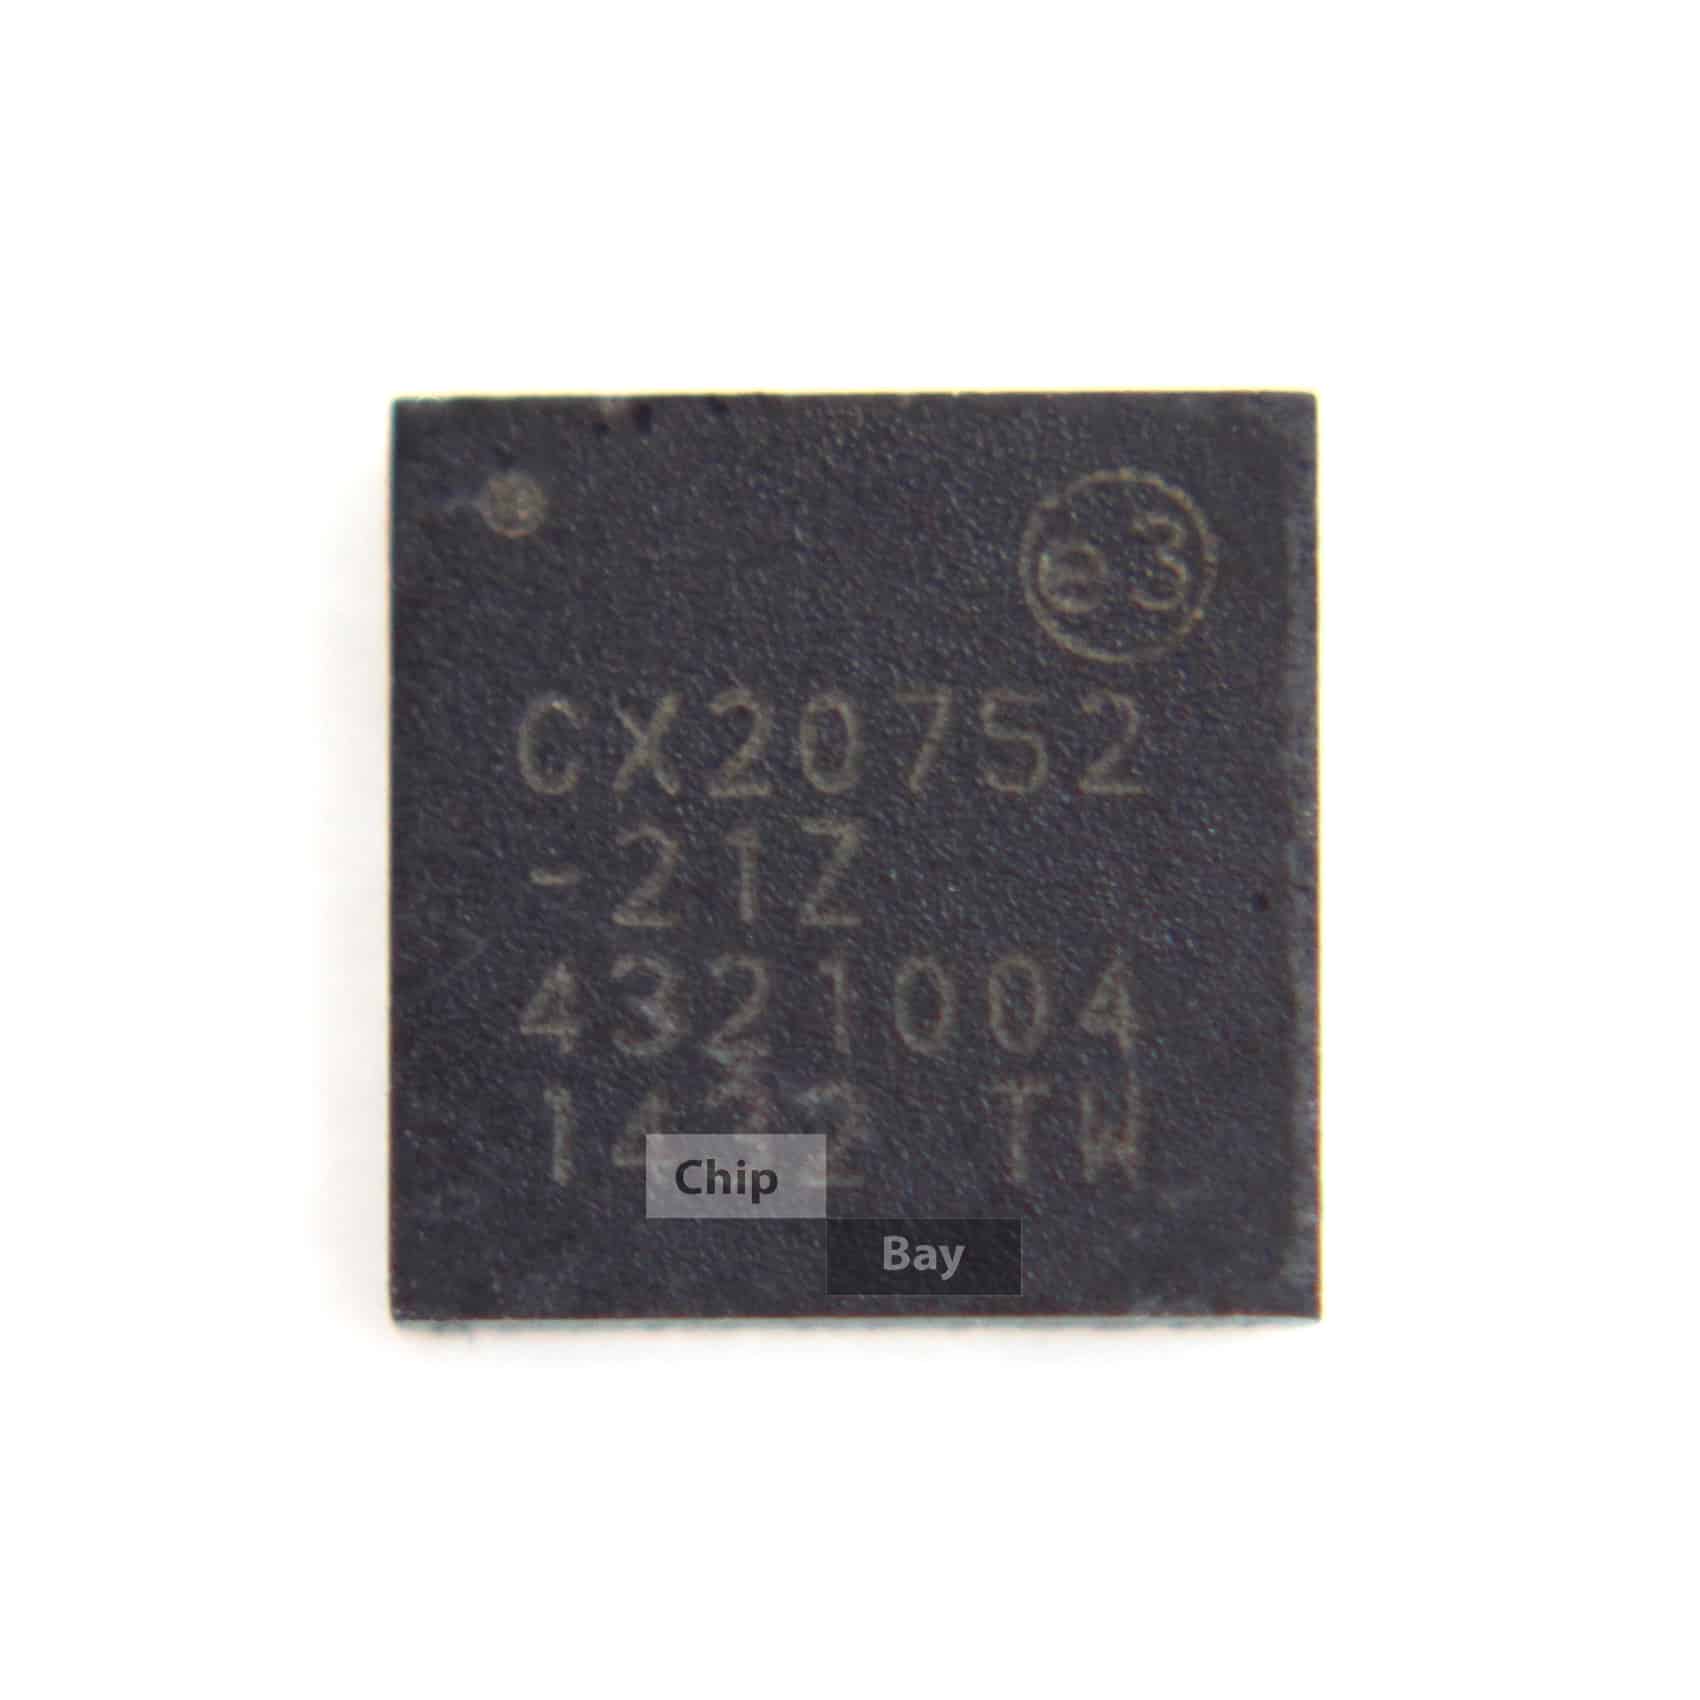 CONEXANT CX20752-21Z CX20752 low-power high definition audio codec ic chip